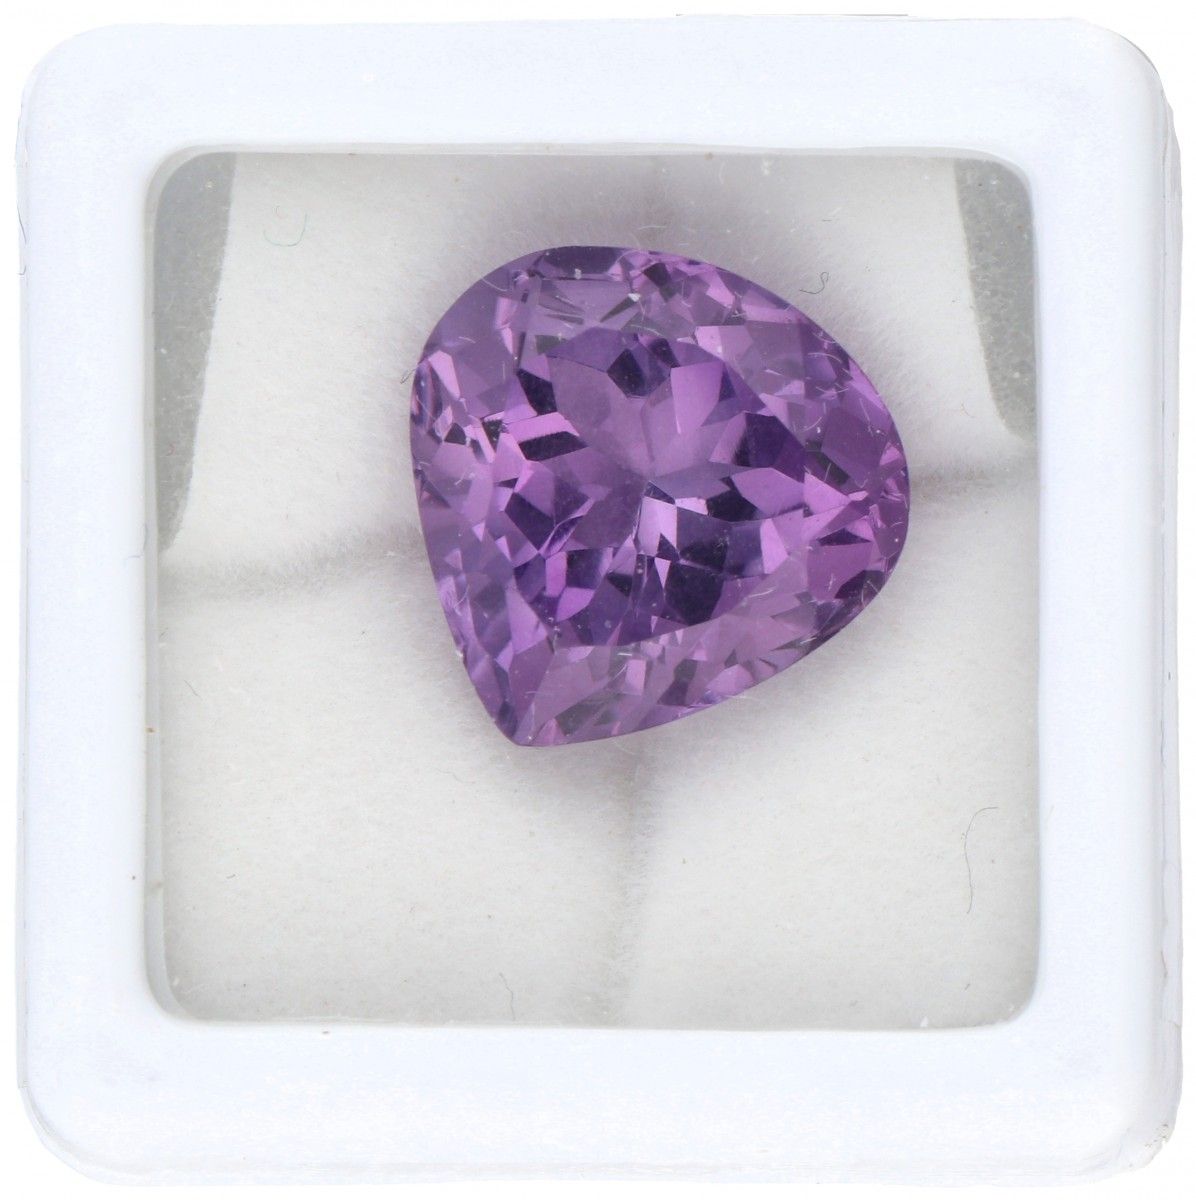 GLI Certified Natural Amethyst Gemstone 8.55 ct. 切割。心形, 颜色: 紫色, 重量: 8.55 ct.(13.&hellip;